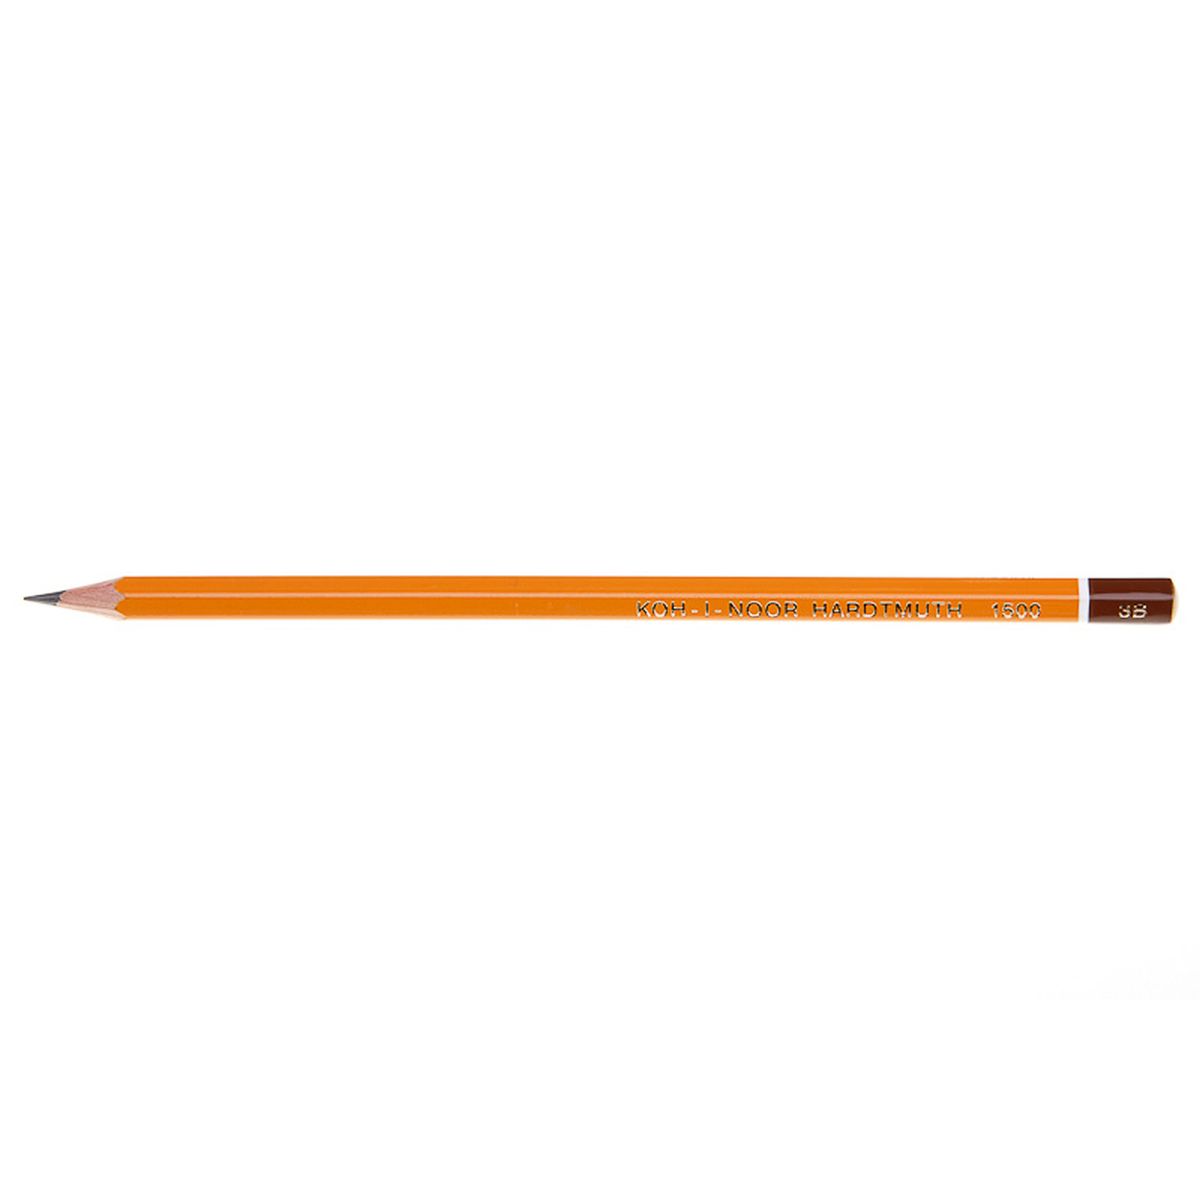 Ołówek Koh-I-Noor 1500 3B